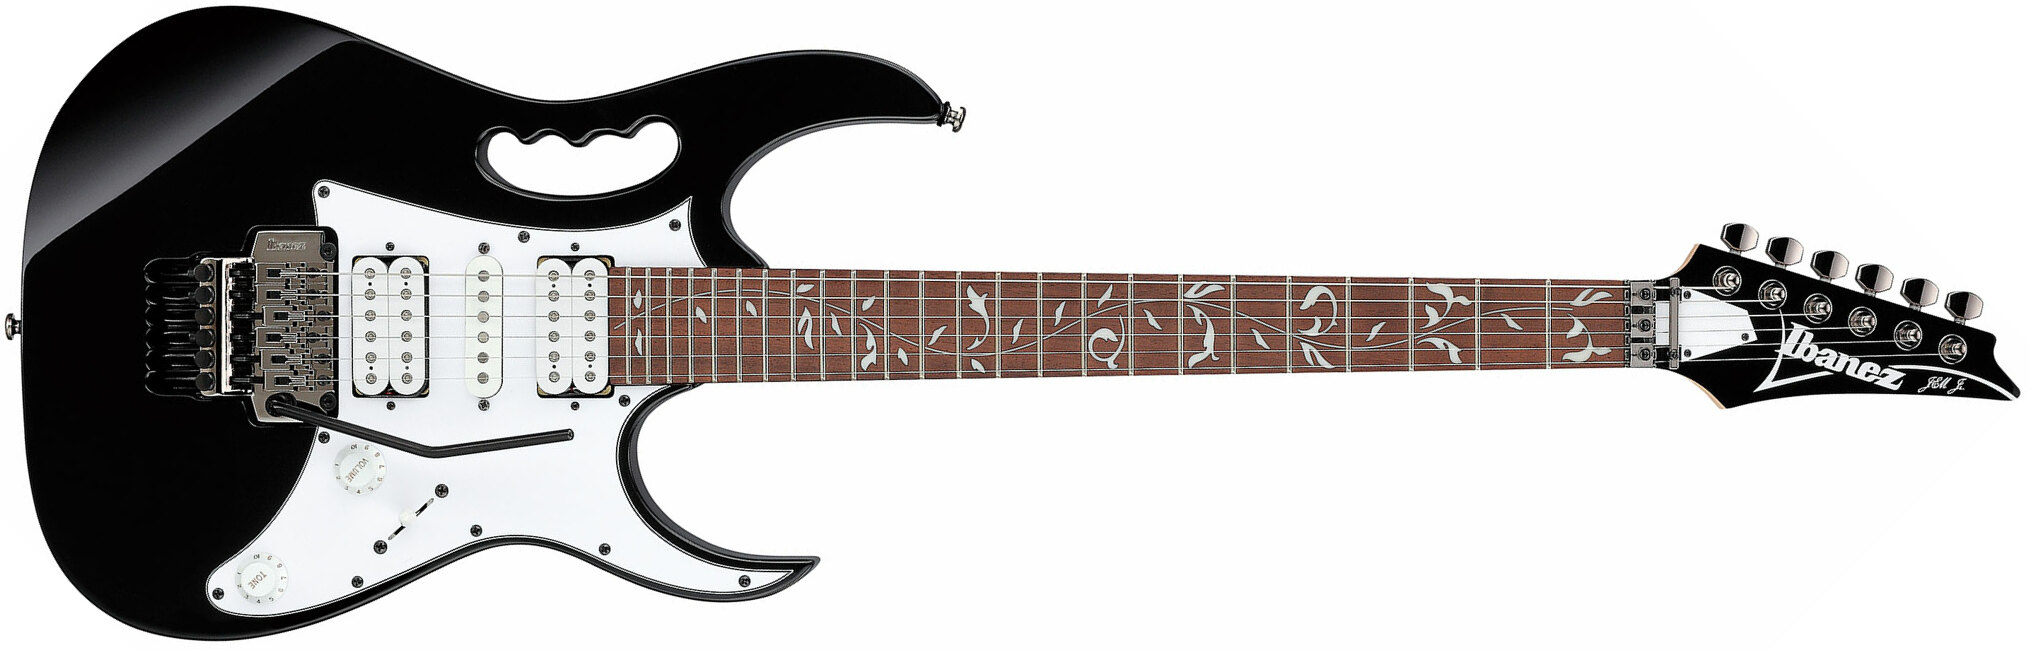 Ibanez Steve Vai Jemjr Bk Signature Hsh Fr Jat - Black - Str shape electric guitar - Main picture